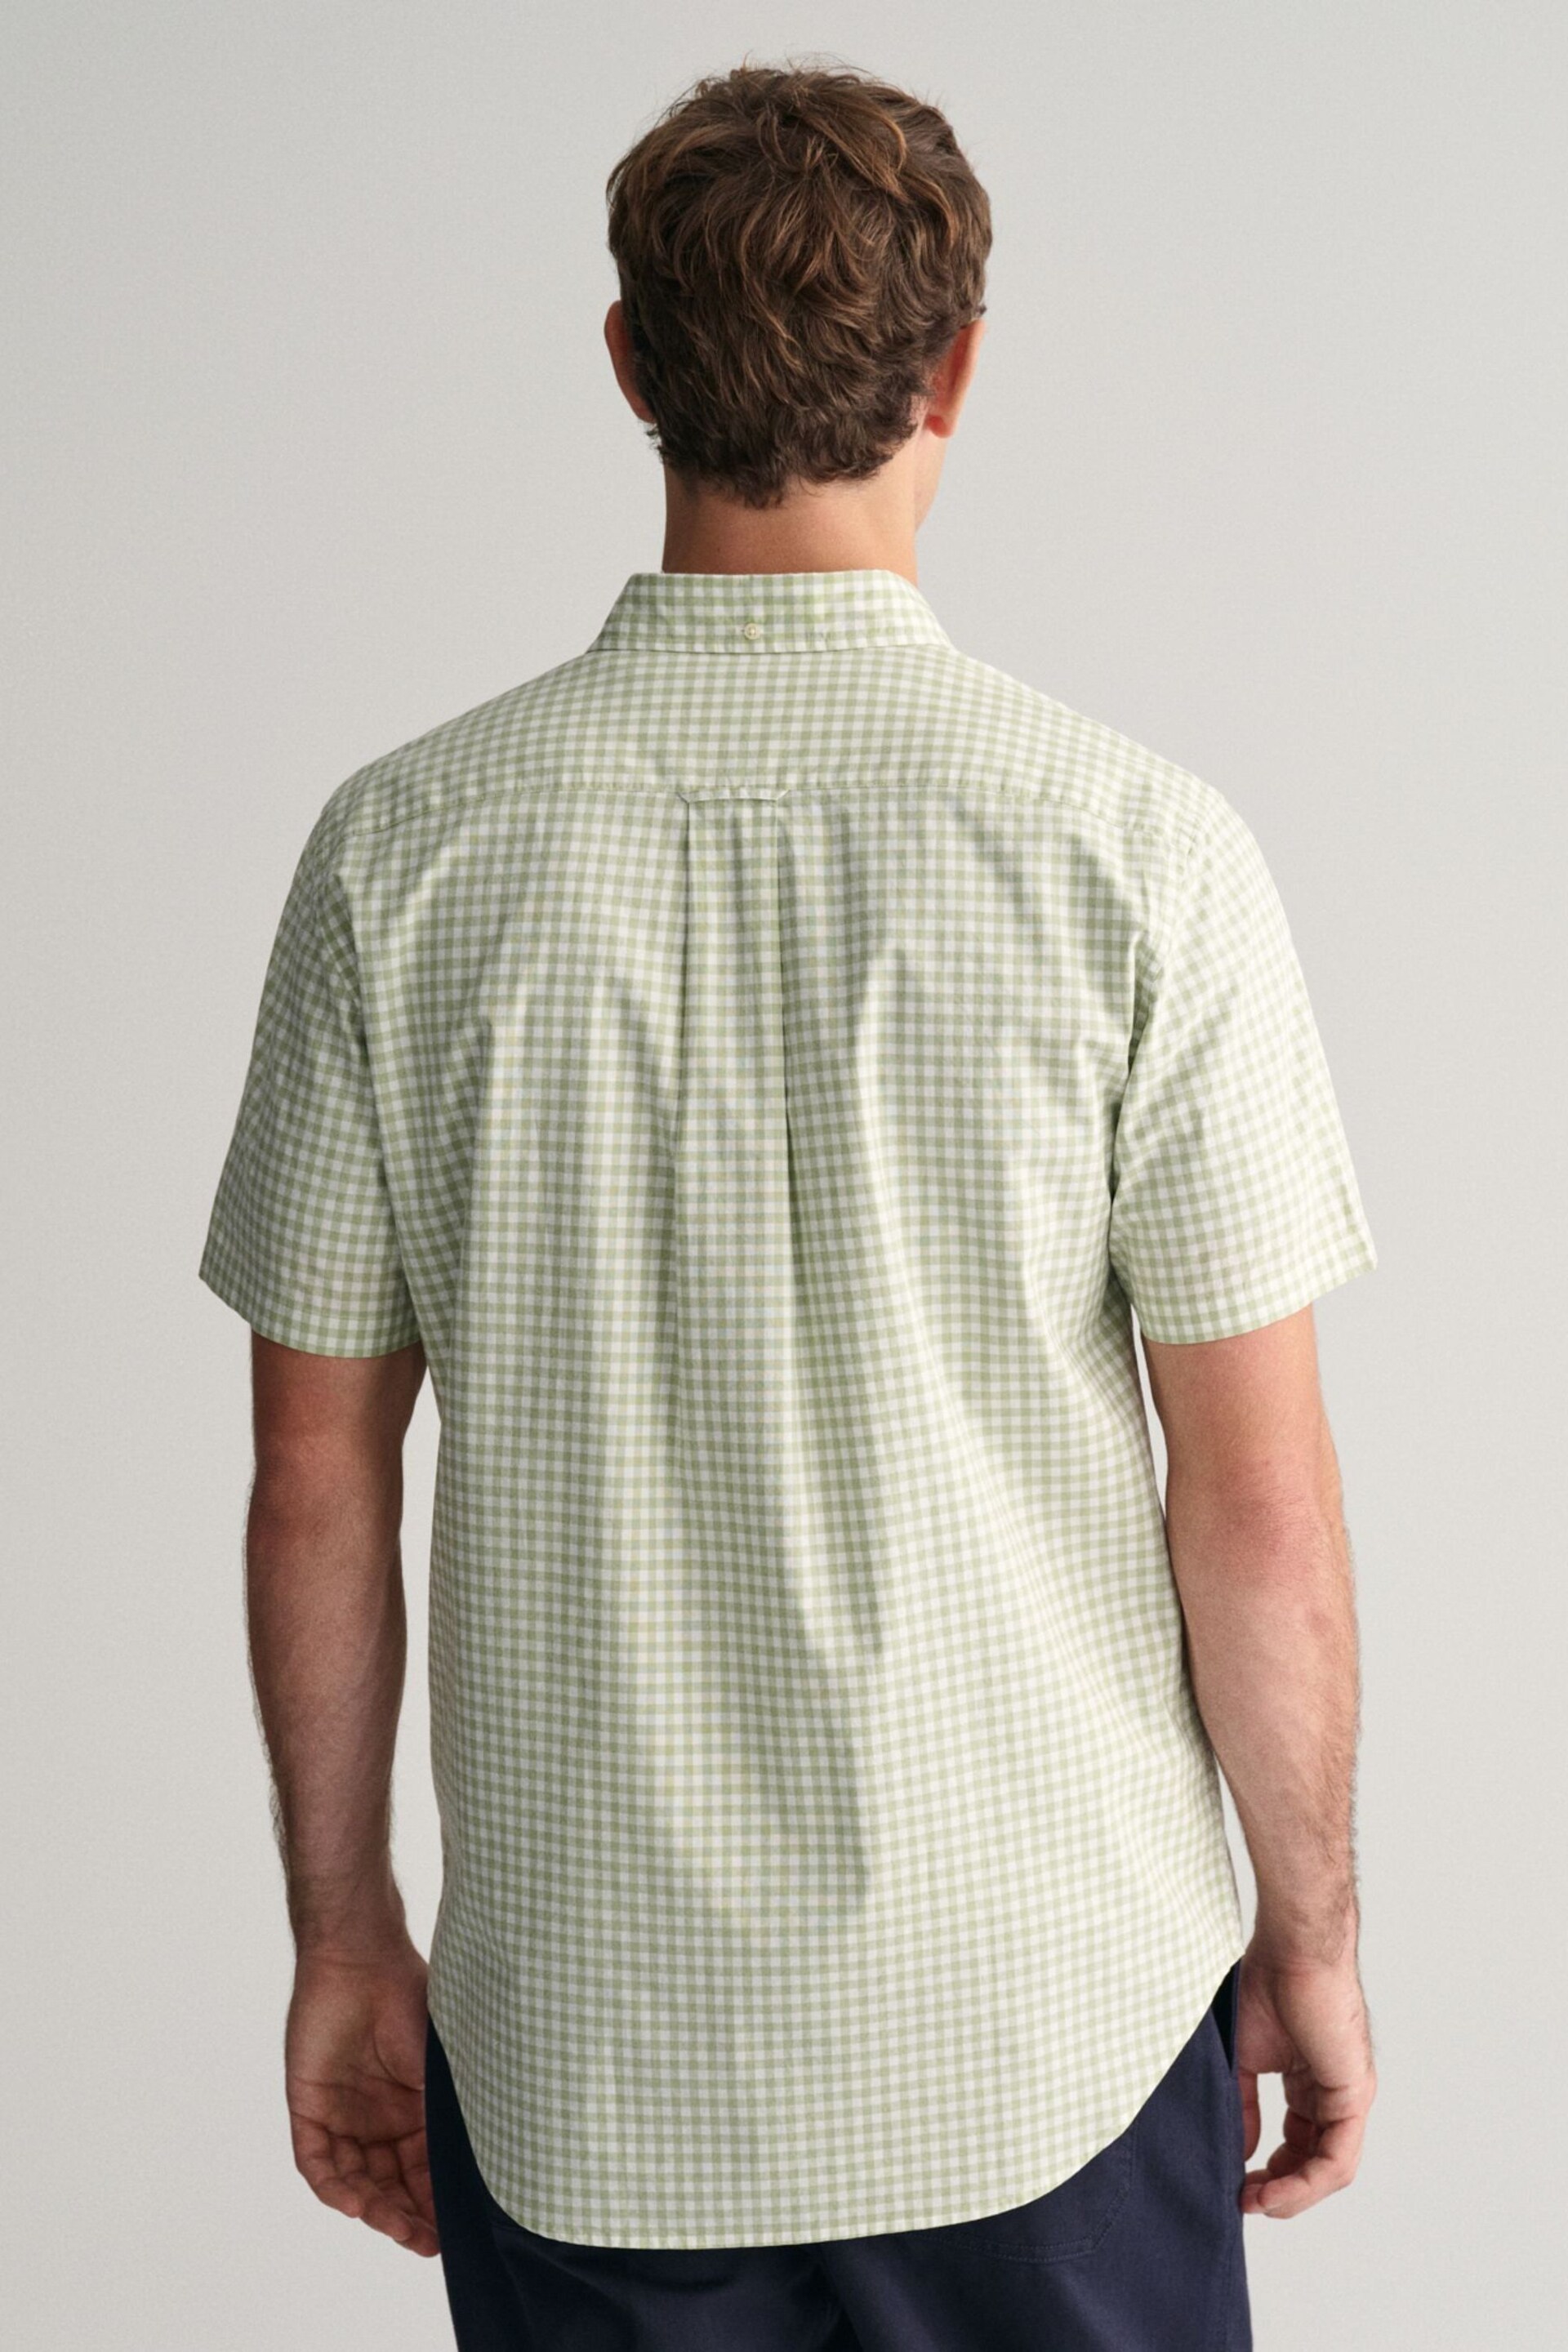 GANT Regular Fit Gingham Poplin Short Sleeve Shirt - Image 2 of 5